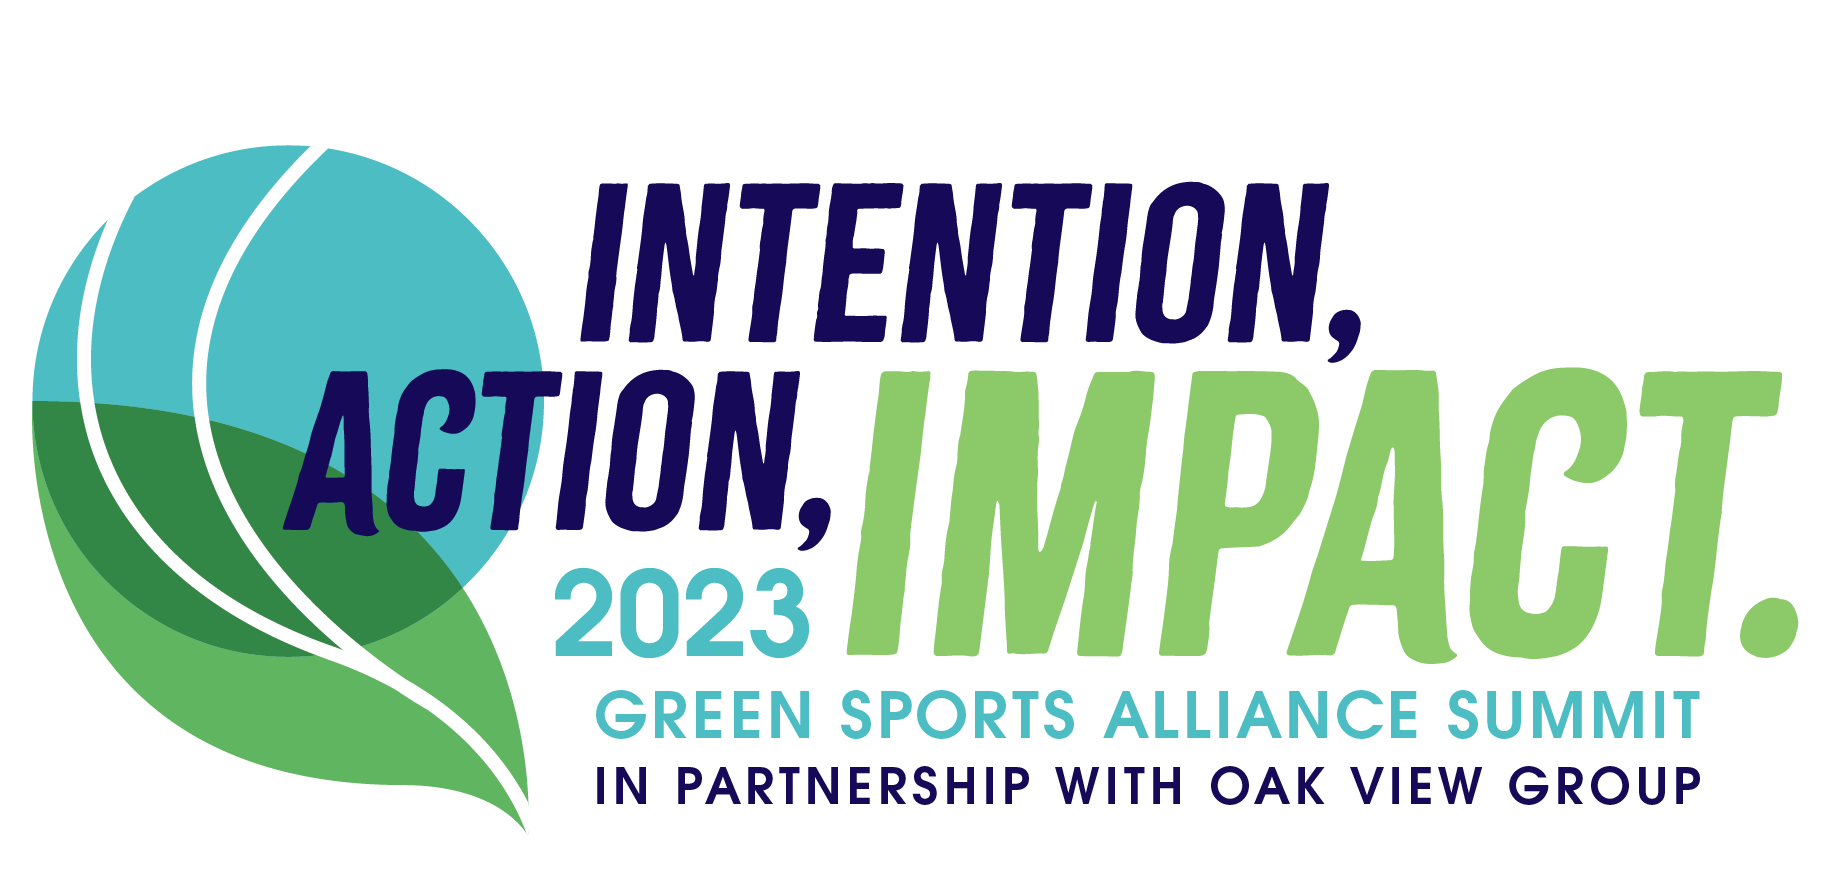 Green Sports Alliance Summit 2023 @Climate Pledge Arena, SeattleにJapan Delegationとして参加しました